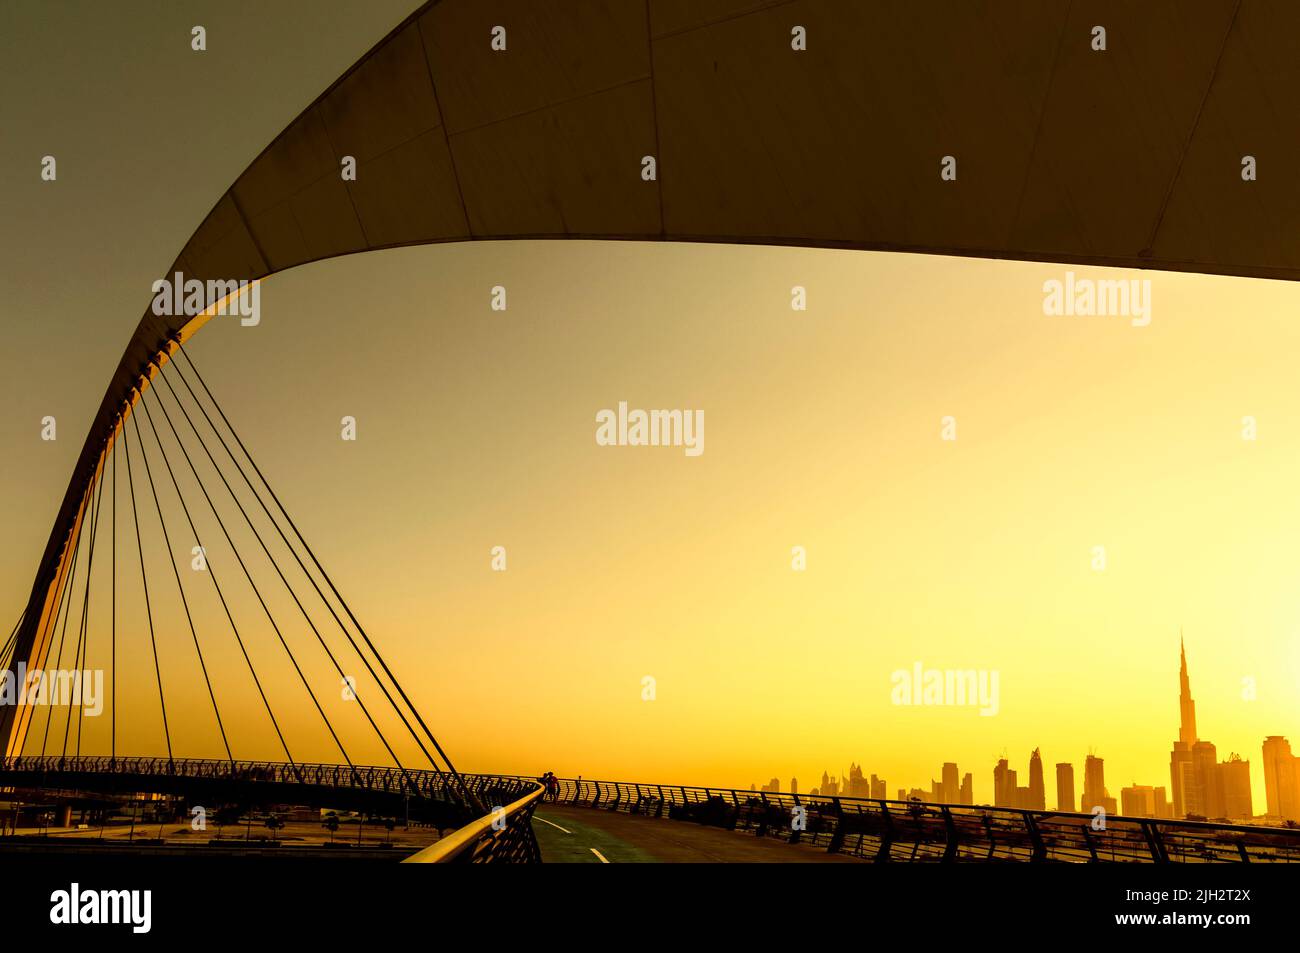 Panoramic view of Dubai skyline from Dubai Creek, United Arab Emirates Stock Photo